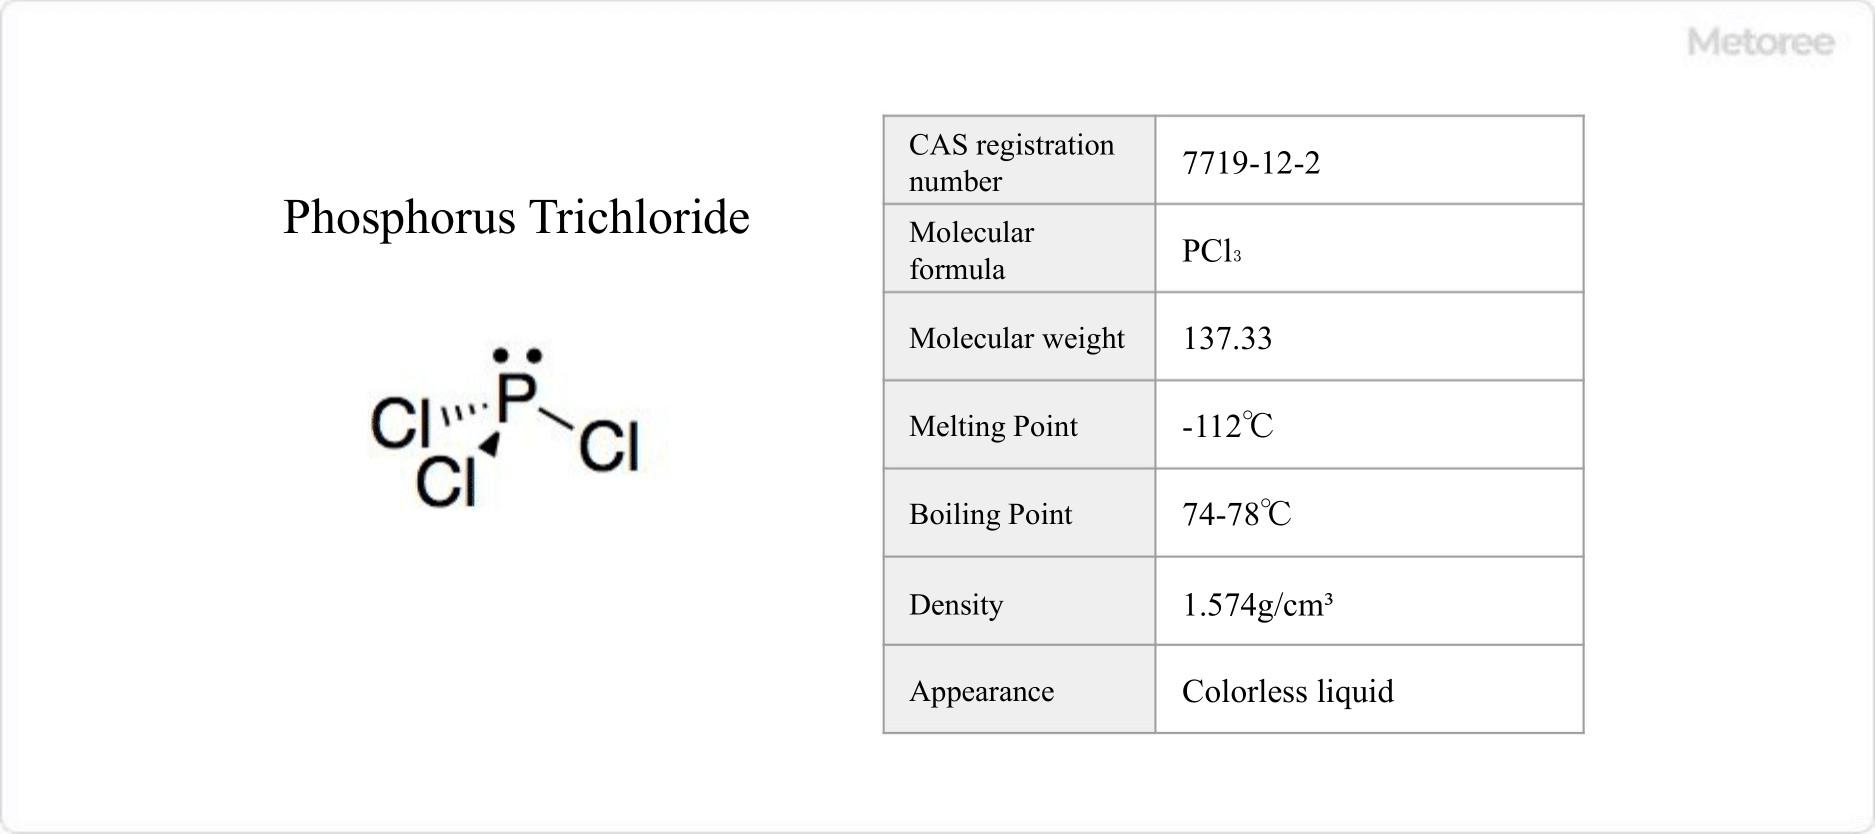 Figure 1. Basic information on phosphorus trichloride